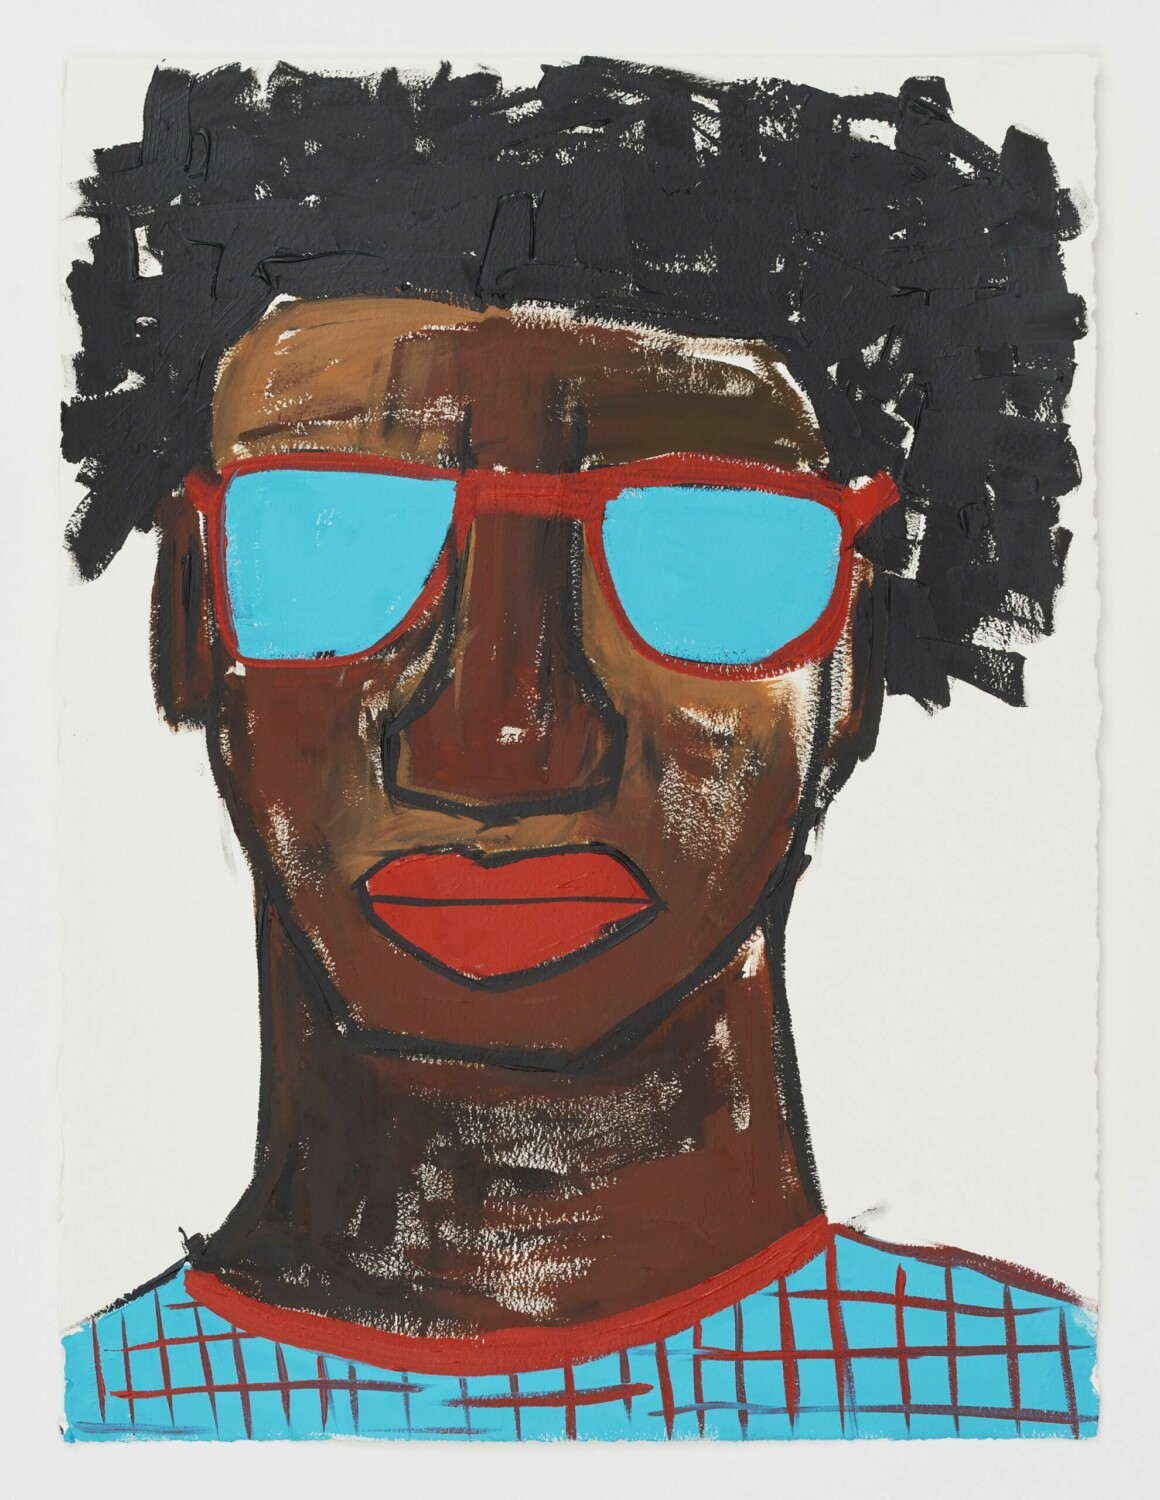 Leilah Babirye, 'Kuchu Ndagamuntu (Queer Identity Card)', 2021. Acrylic on paper, 76.2 x 58.4cm (30 x 23in). Framed: 85.1 x 66cm (33 1/2 x 26in). Copyright Leilah Babirye. Courtesy the artist, Stephen Friedman Gallery, London and Gordon Robichaux, New York. Photo by Ryan Page.